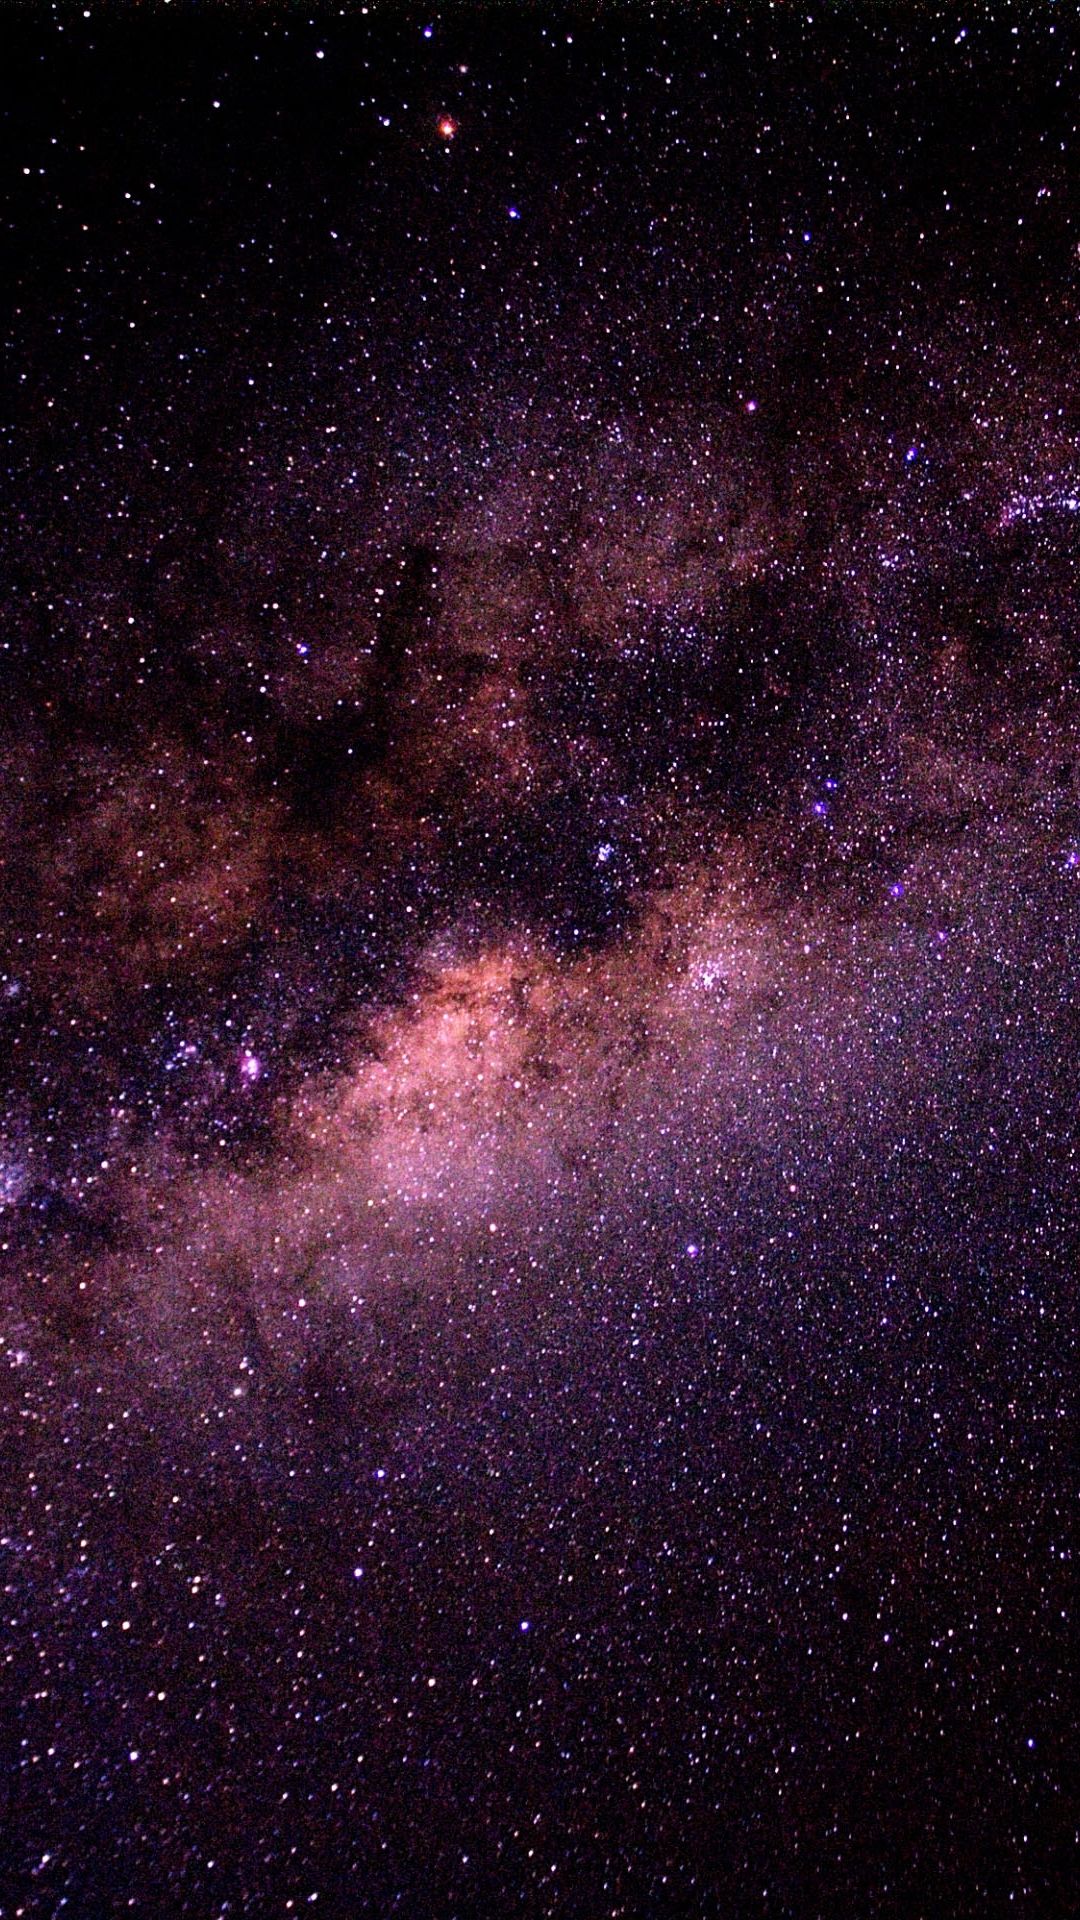 Milky Way GalaxySamsung Wallpaper Download | Free Samsung ...